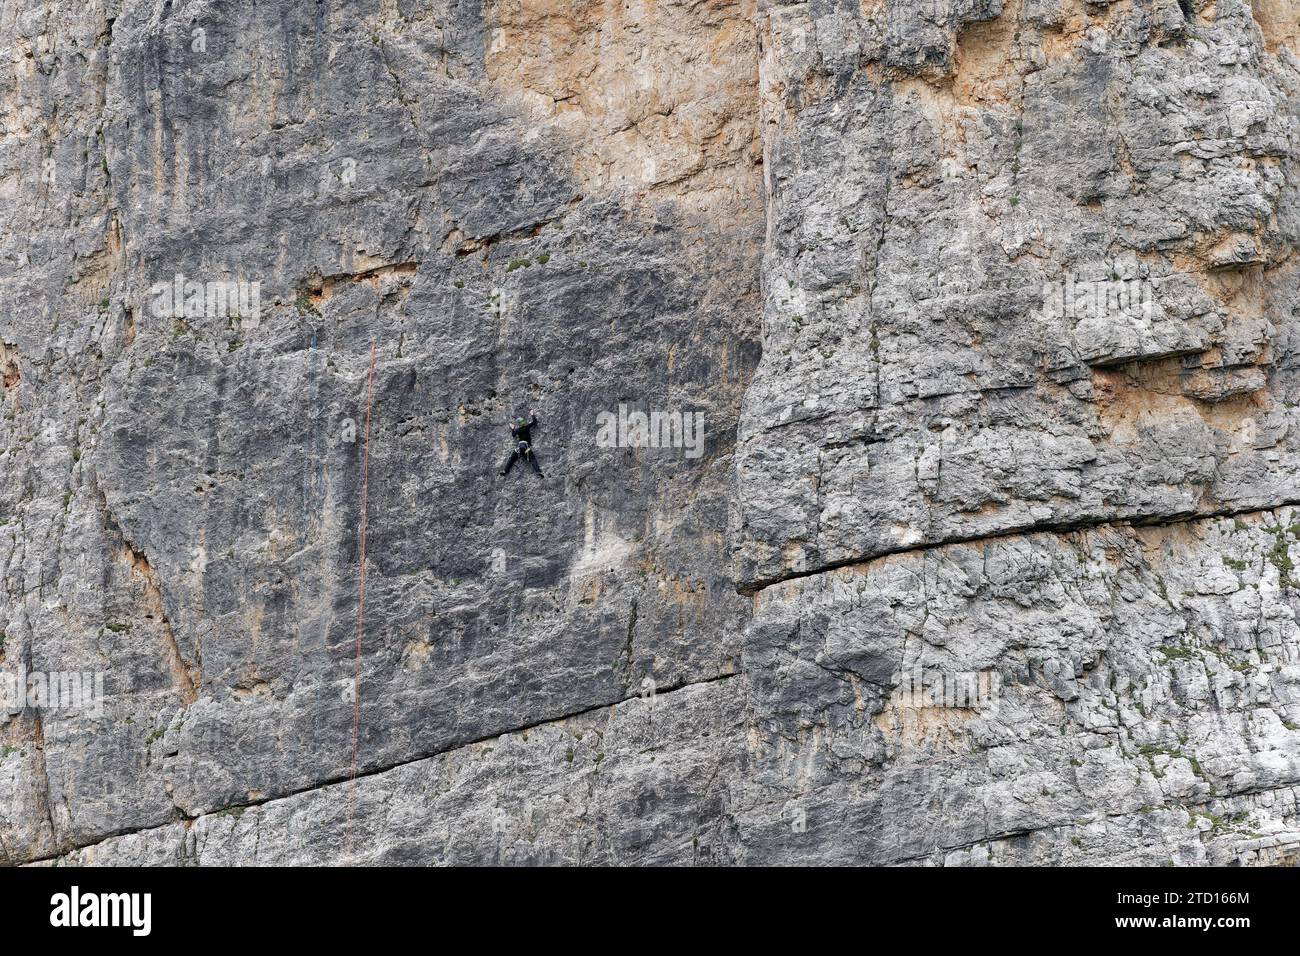 A rock climber climbing a vertical rock wall. Outdoor sports. Mountaineering lifestyle. Stock Photo